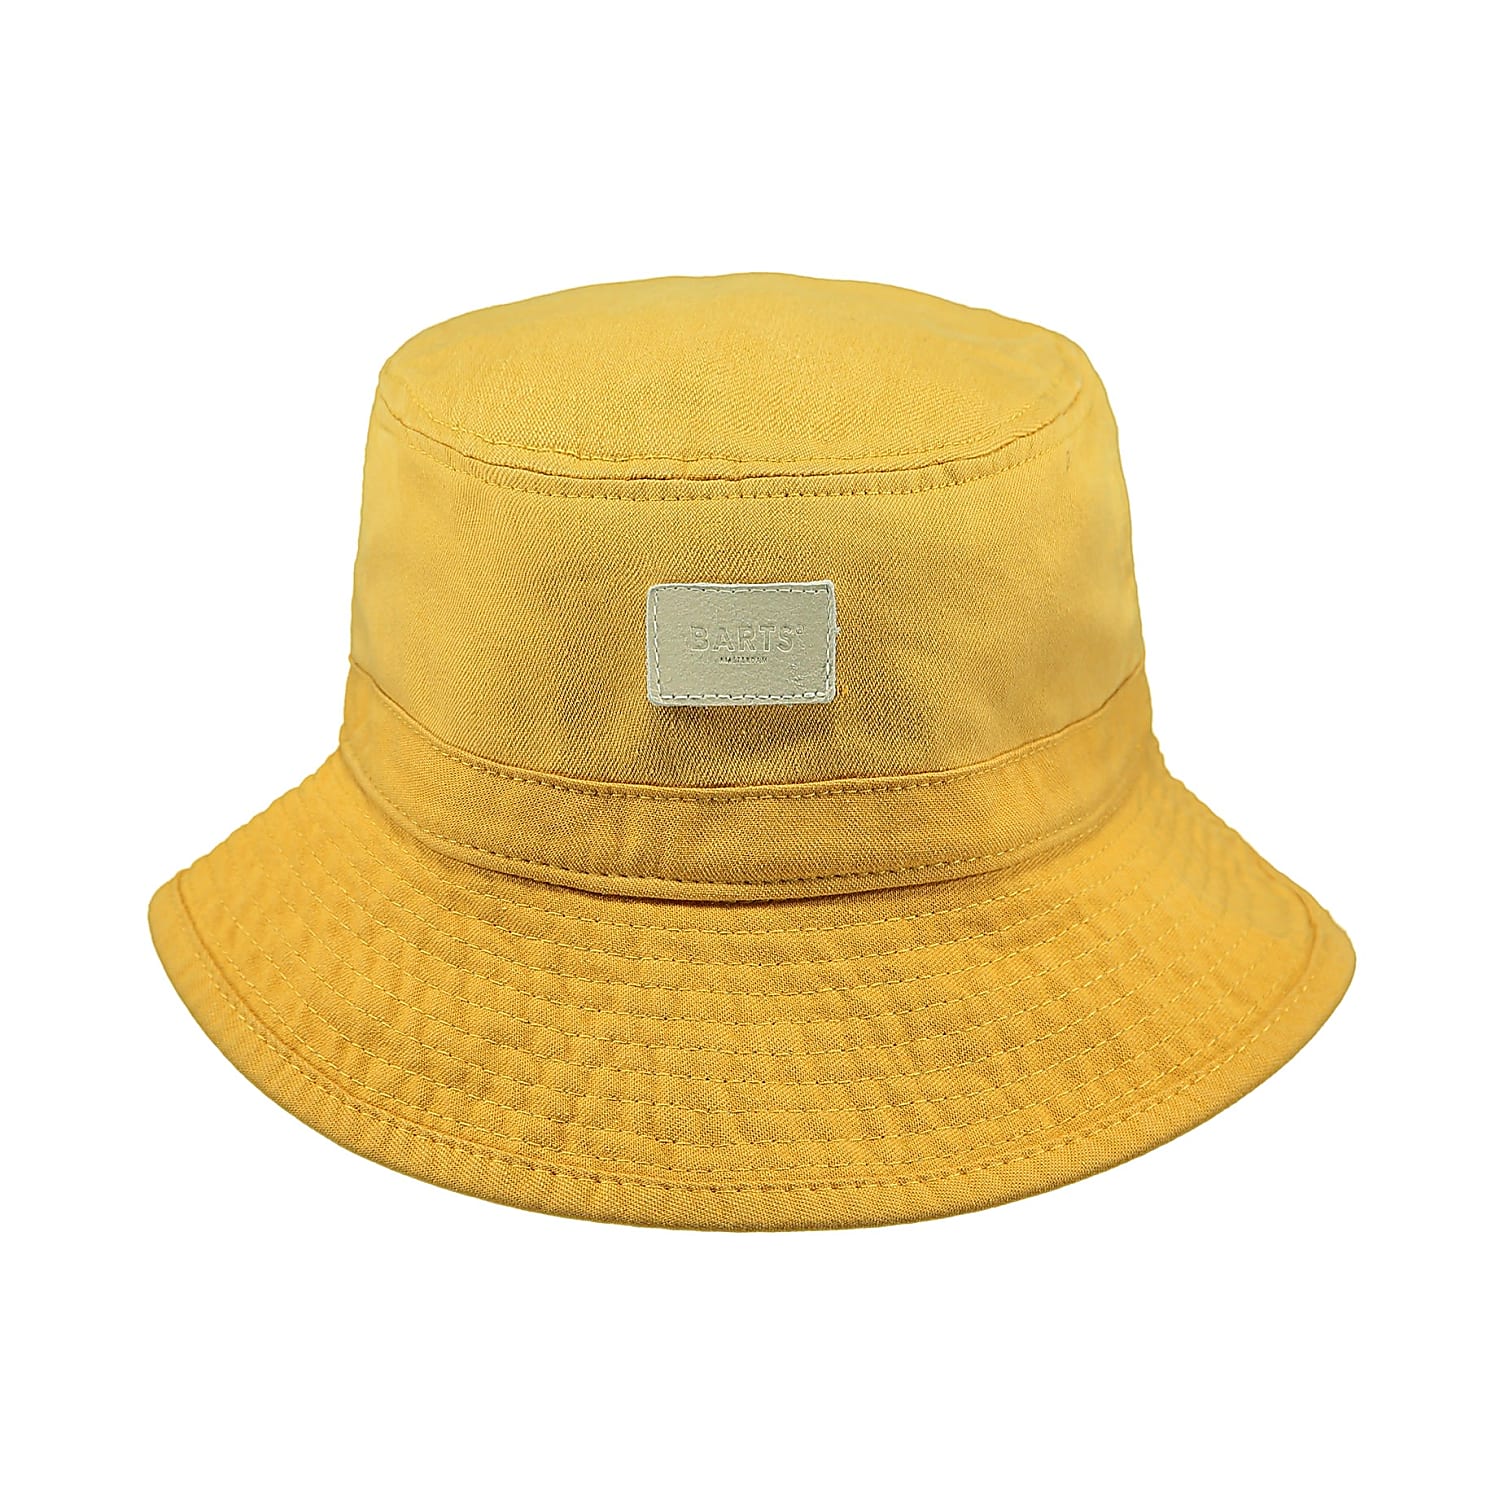 KIDS and - shipping Barts Fast Yellow HAT, OROHENA cheap